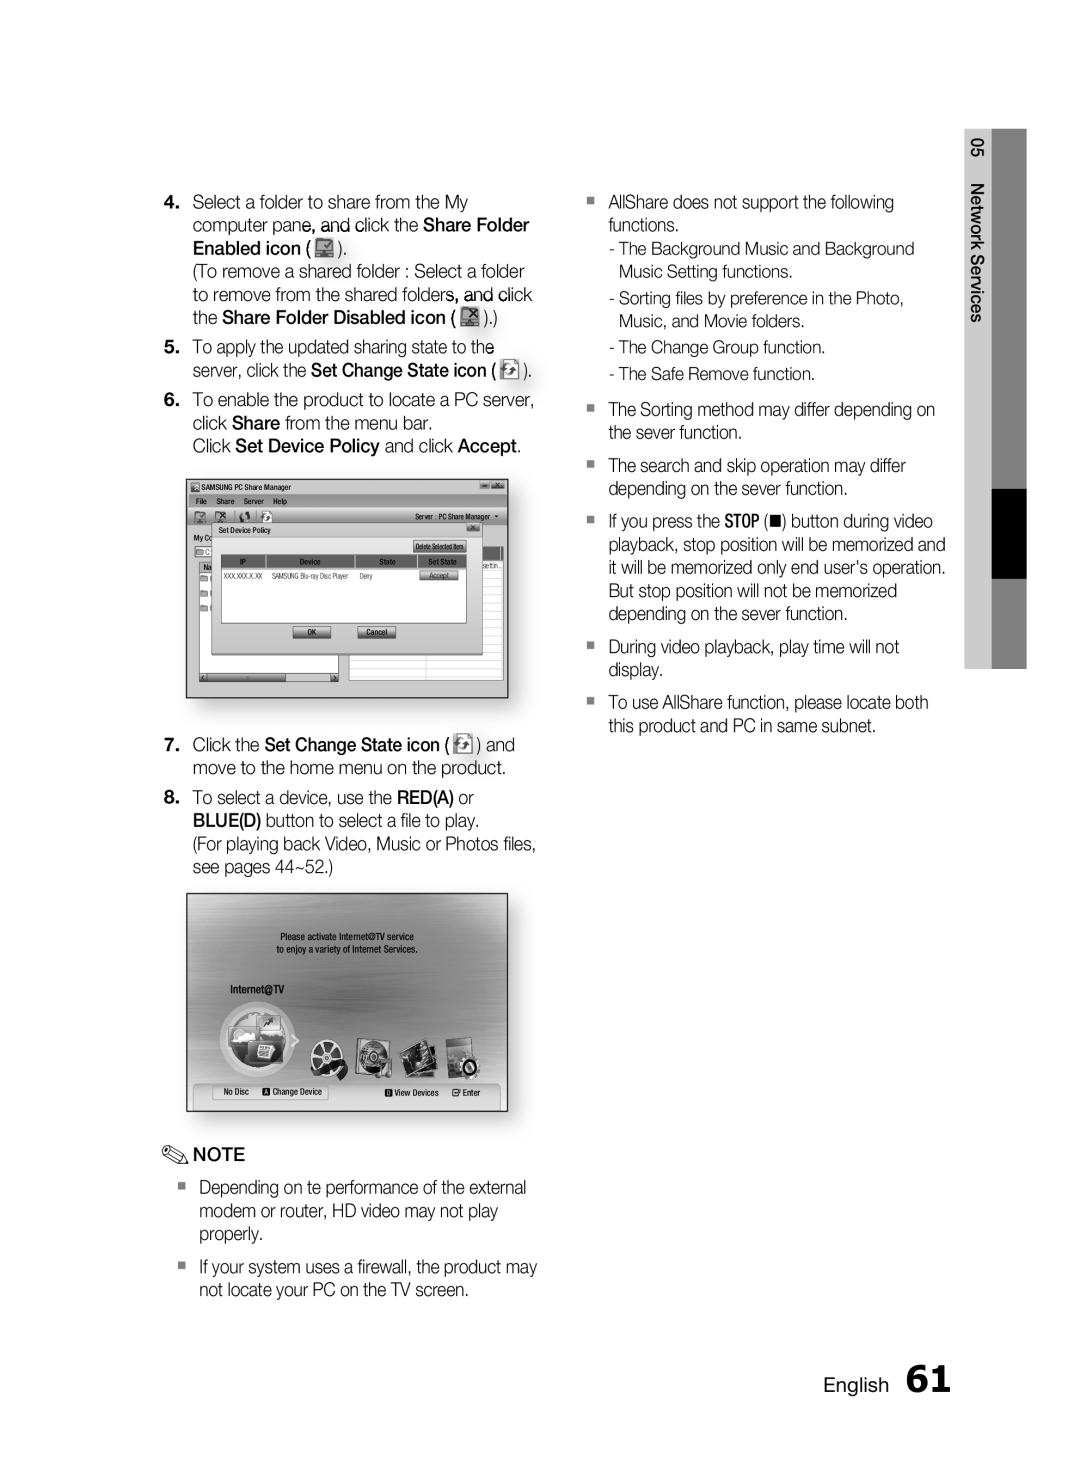 Samsung HT-C6530, AH68-02255S user manual English, To remove a shared folder Select a folder 